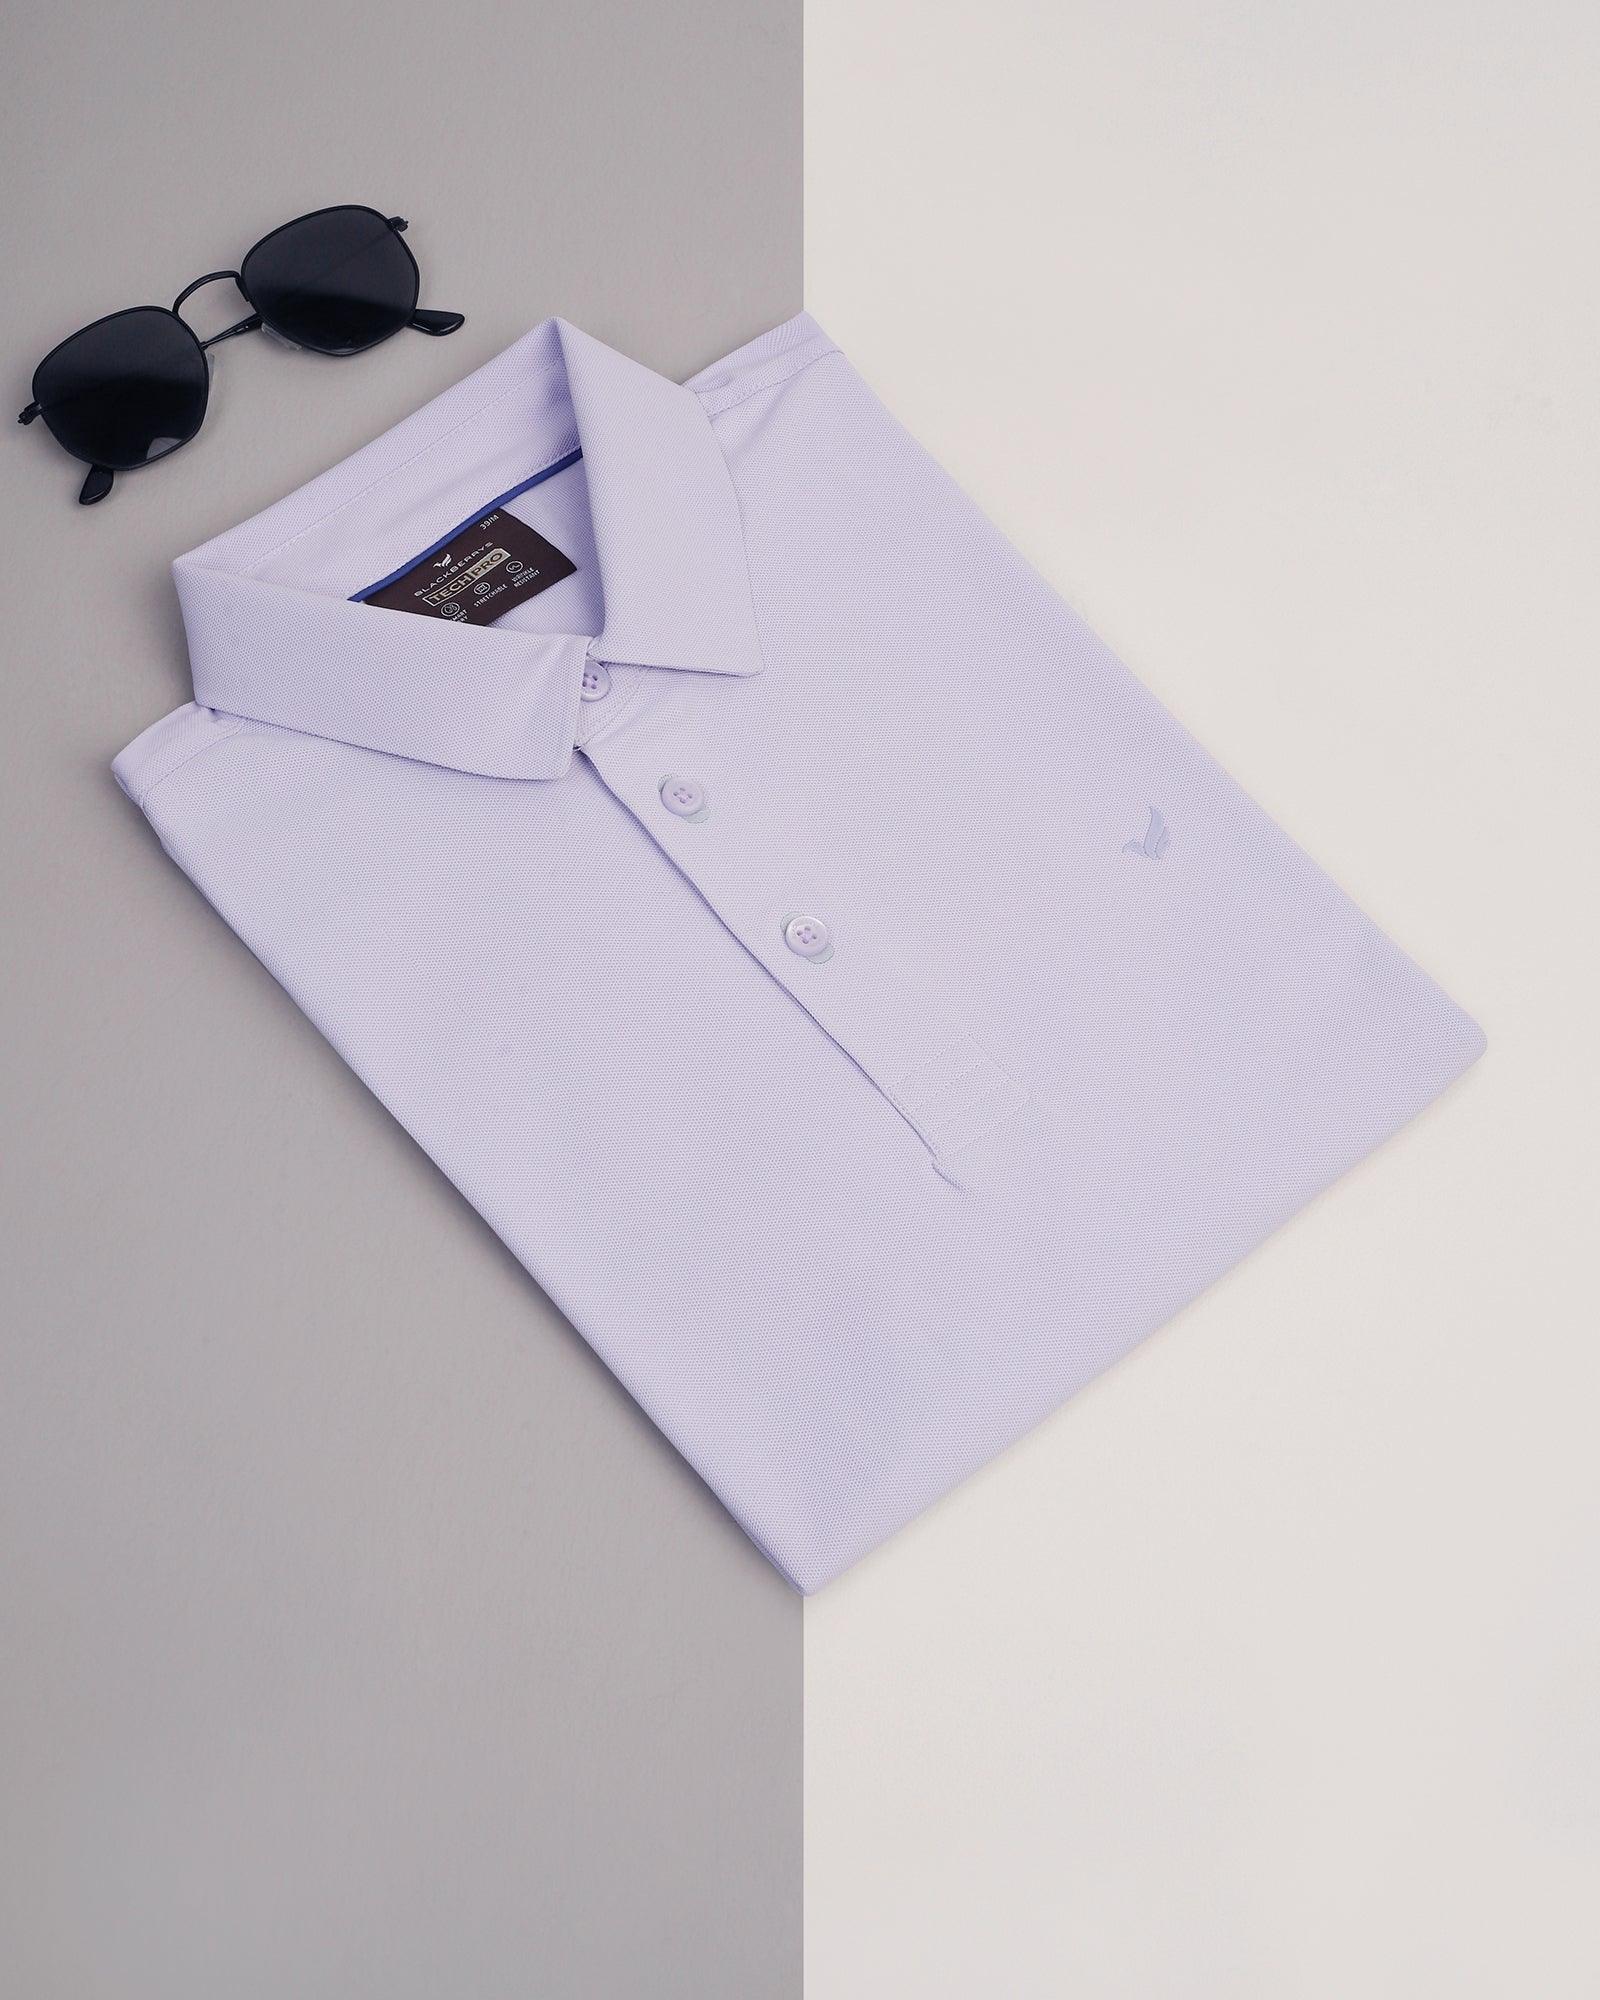 TechPro Polo Lavender Solid T-Shirt - Bran